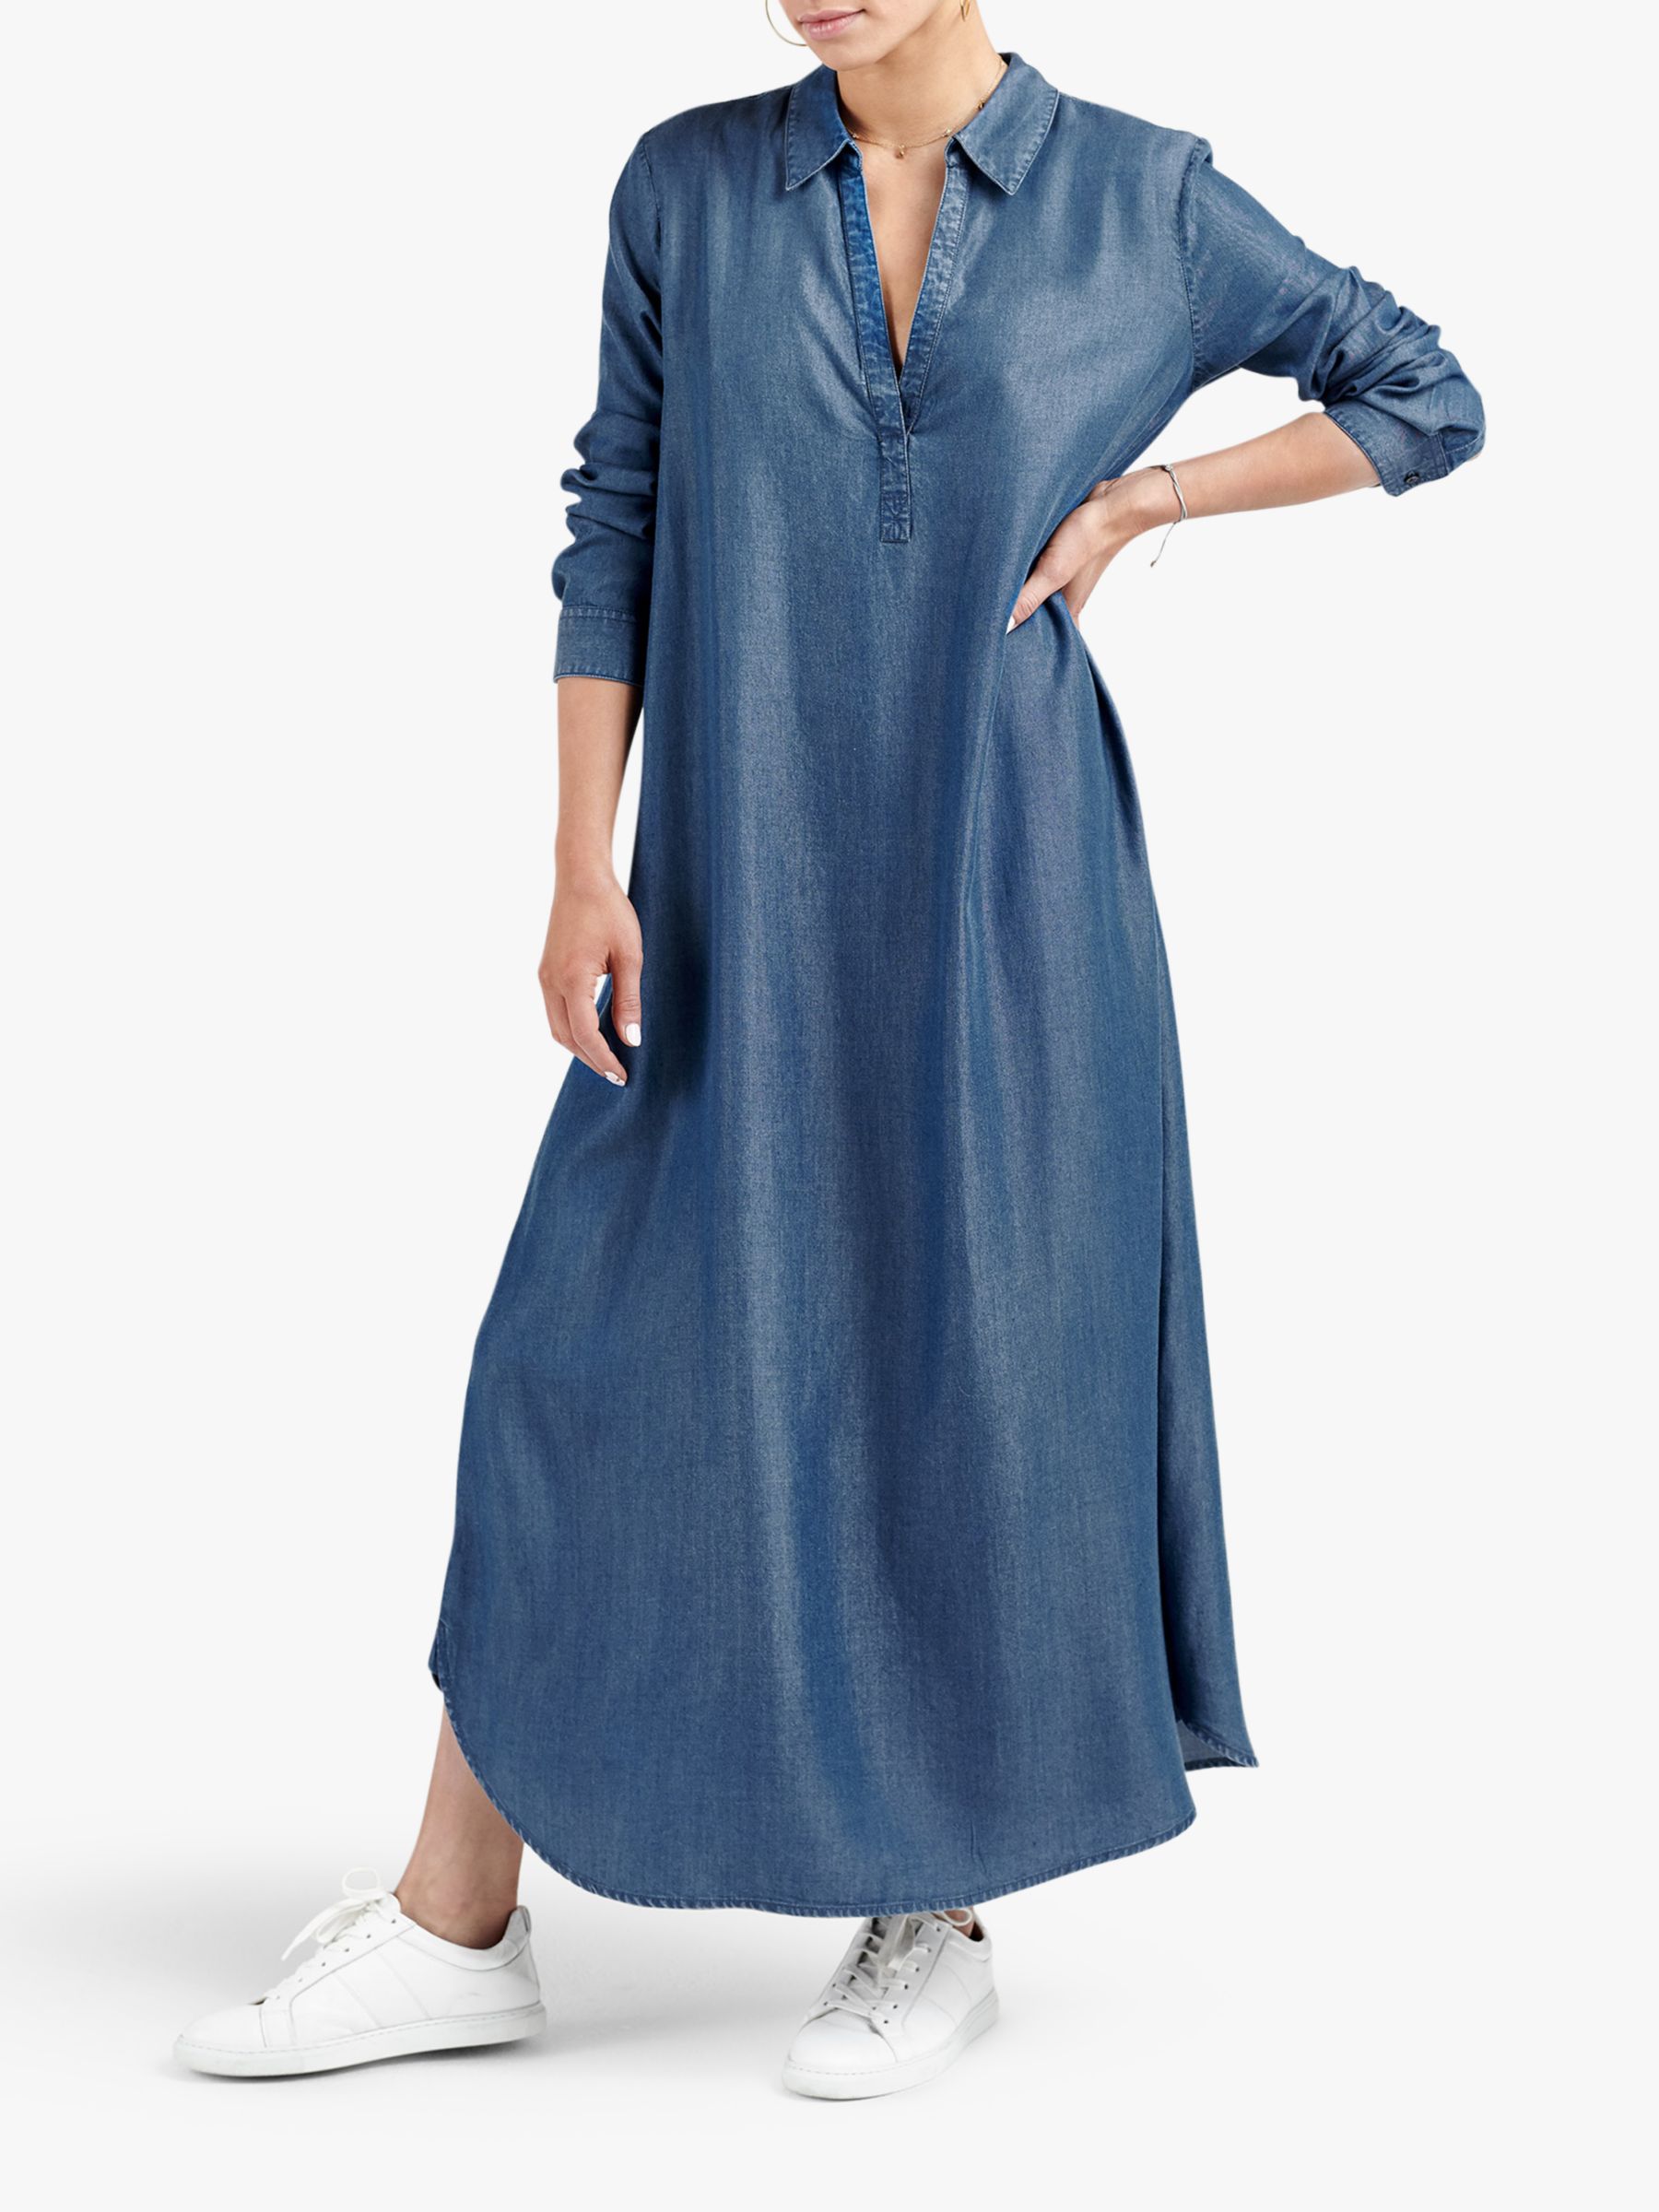 NRBY Chrissie Maxi Shirt Dress, Denim Blue, M